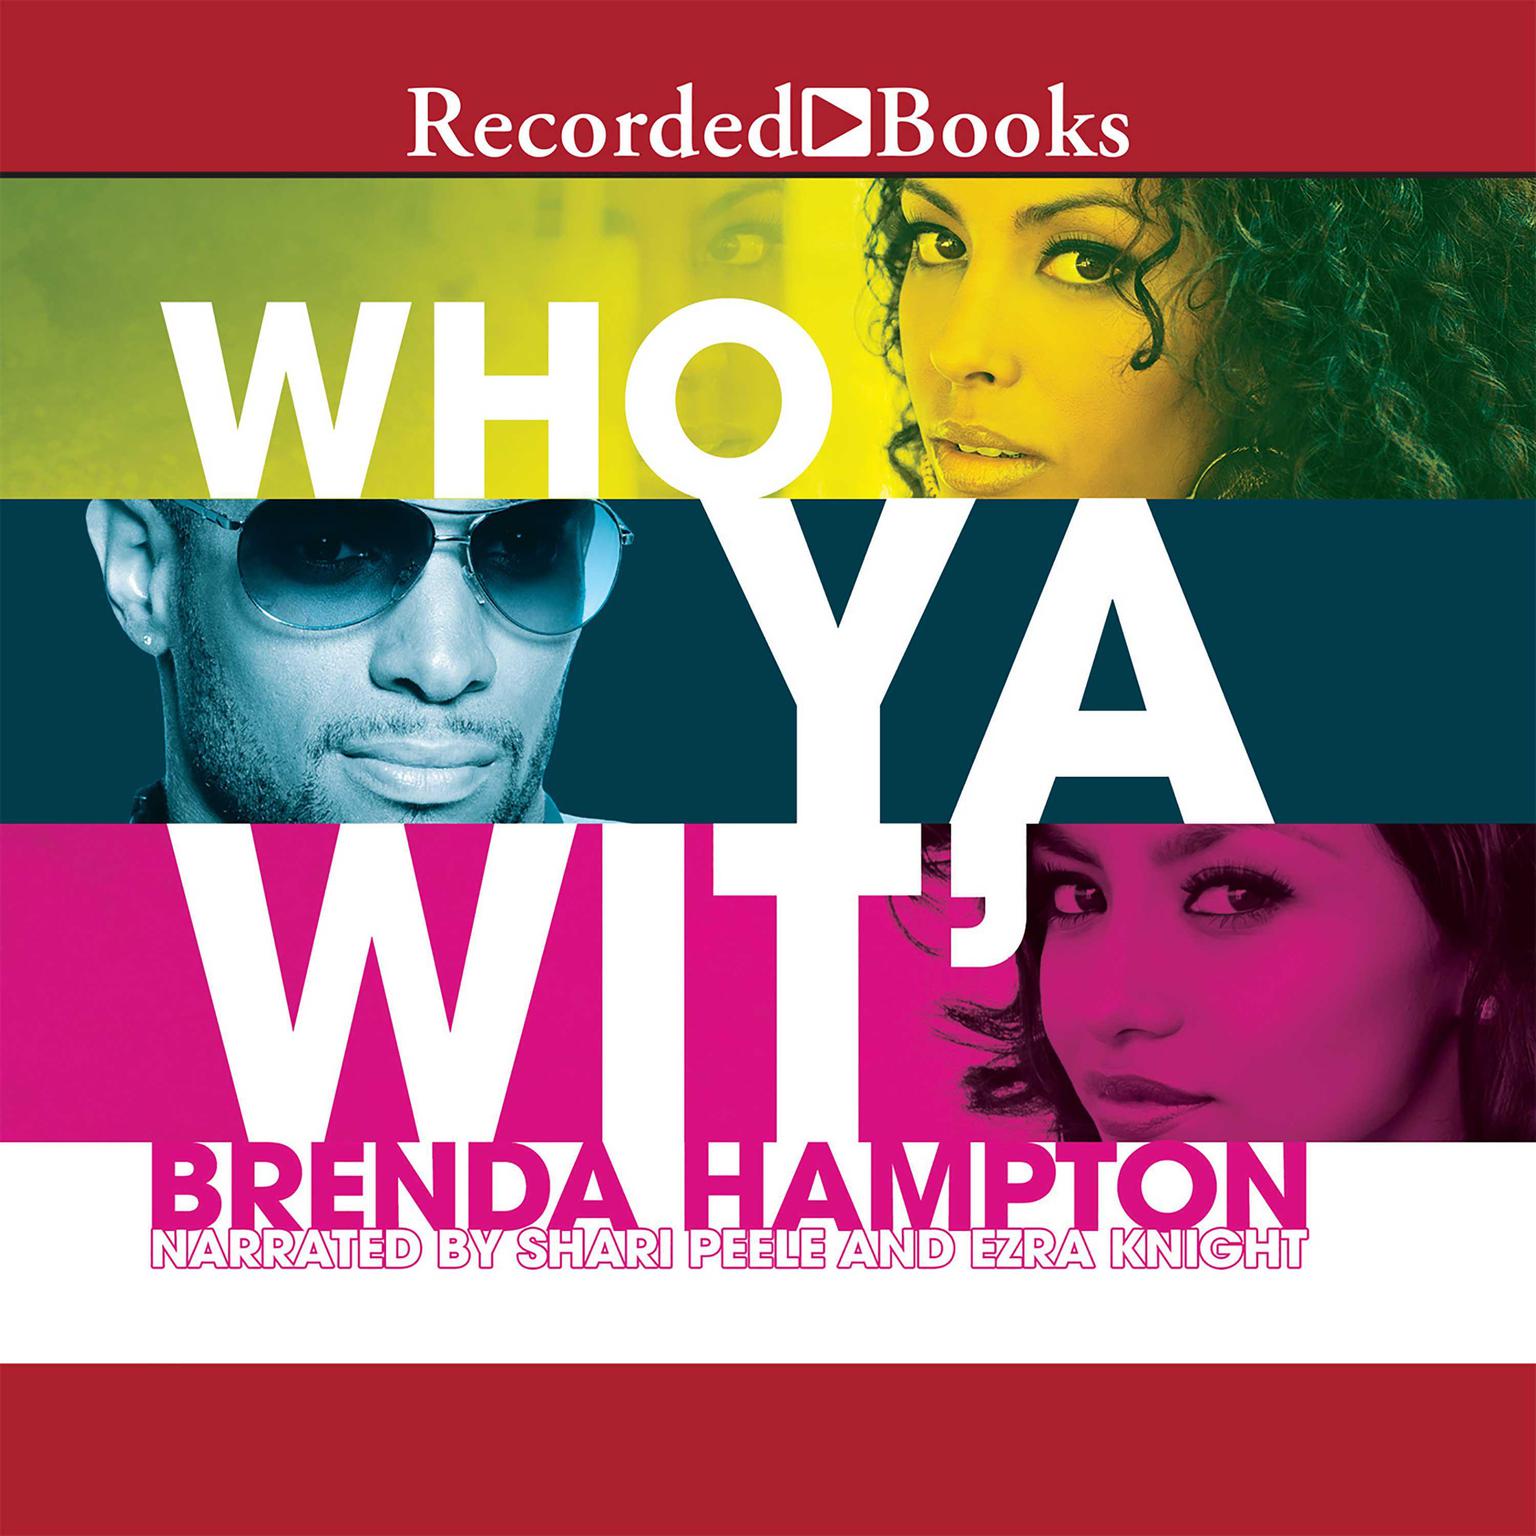 Who Ya Wit: The Finale Audiobook, by Brenda Hampton